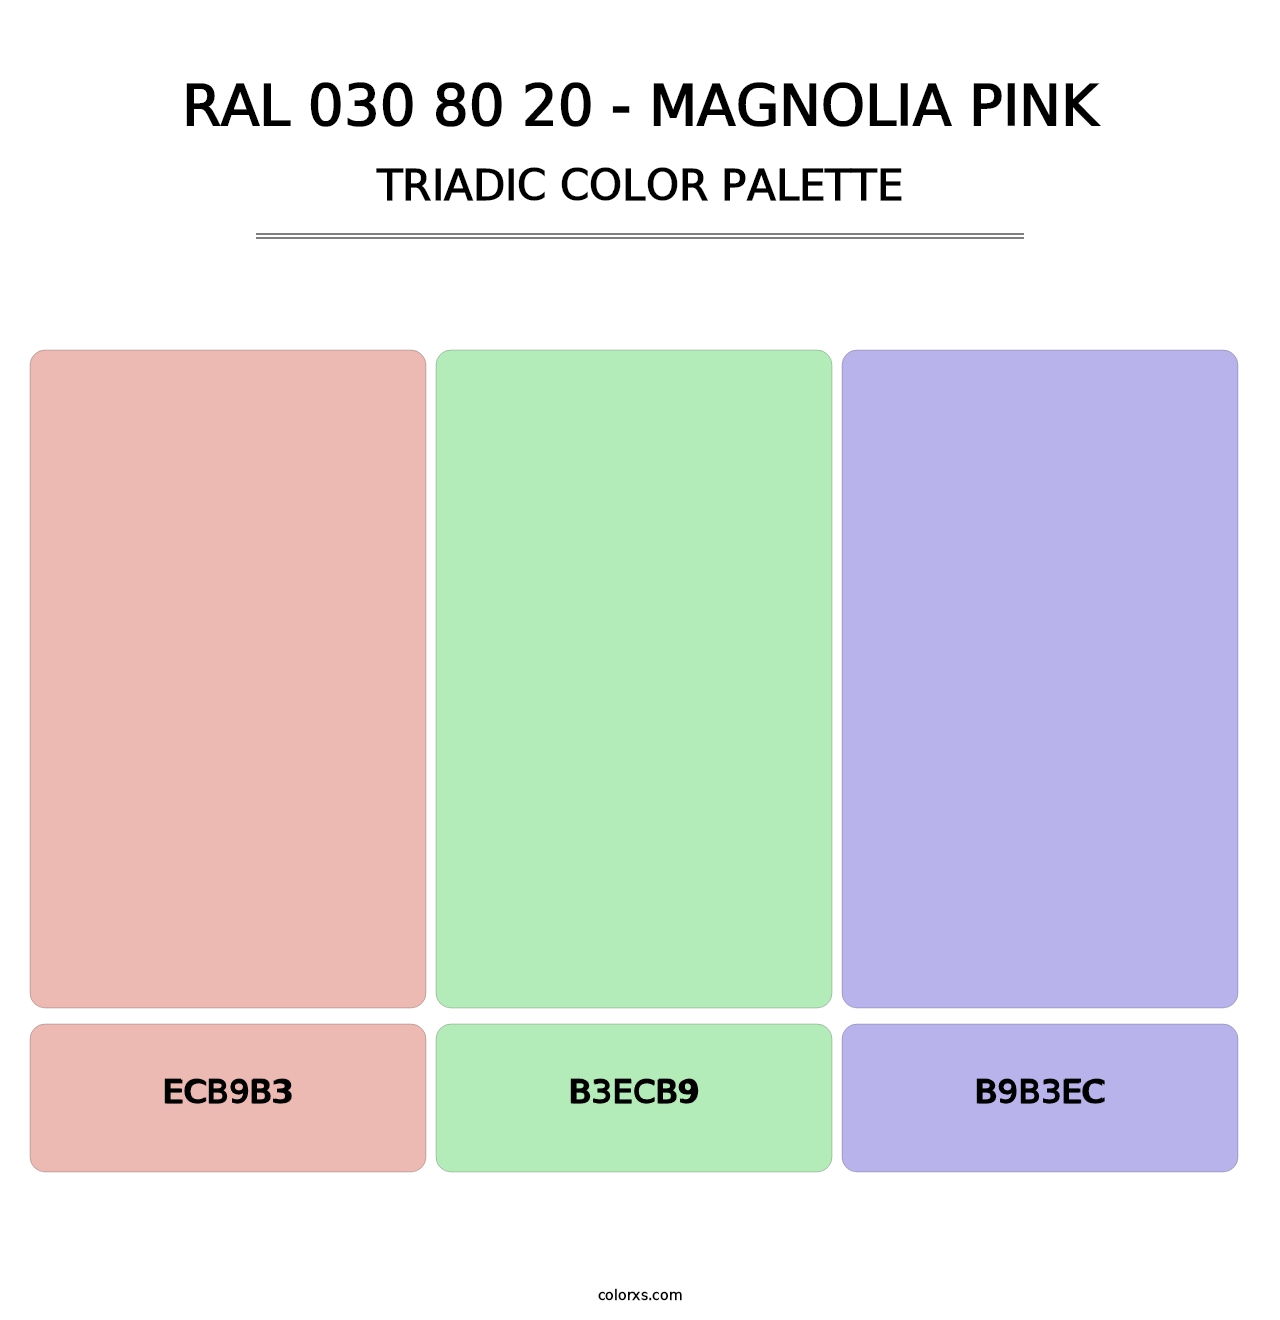 RAL 030 80 20 - Magnolia Pink - Triadic Color Palette